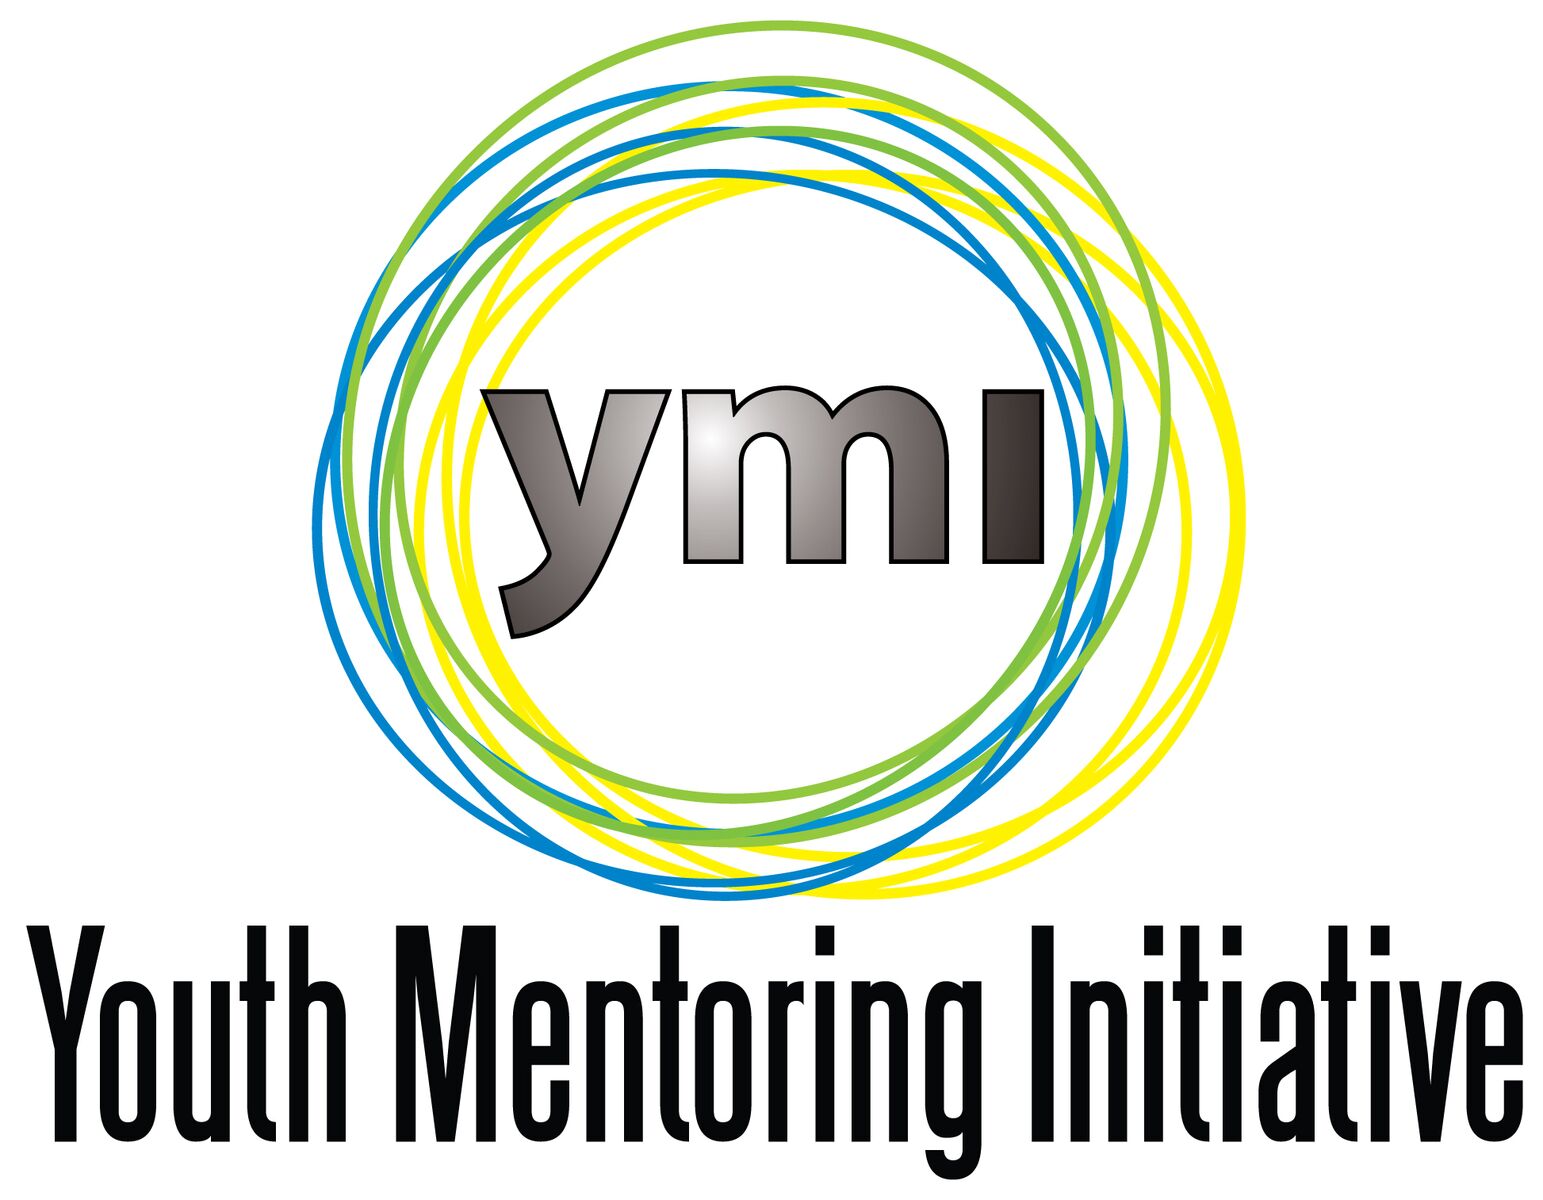 Youth Mentoring Initiative logo